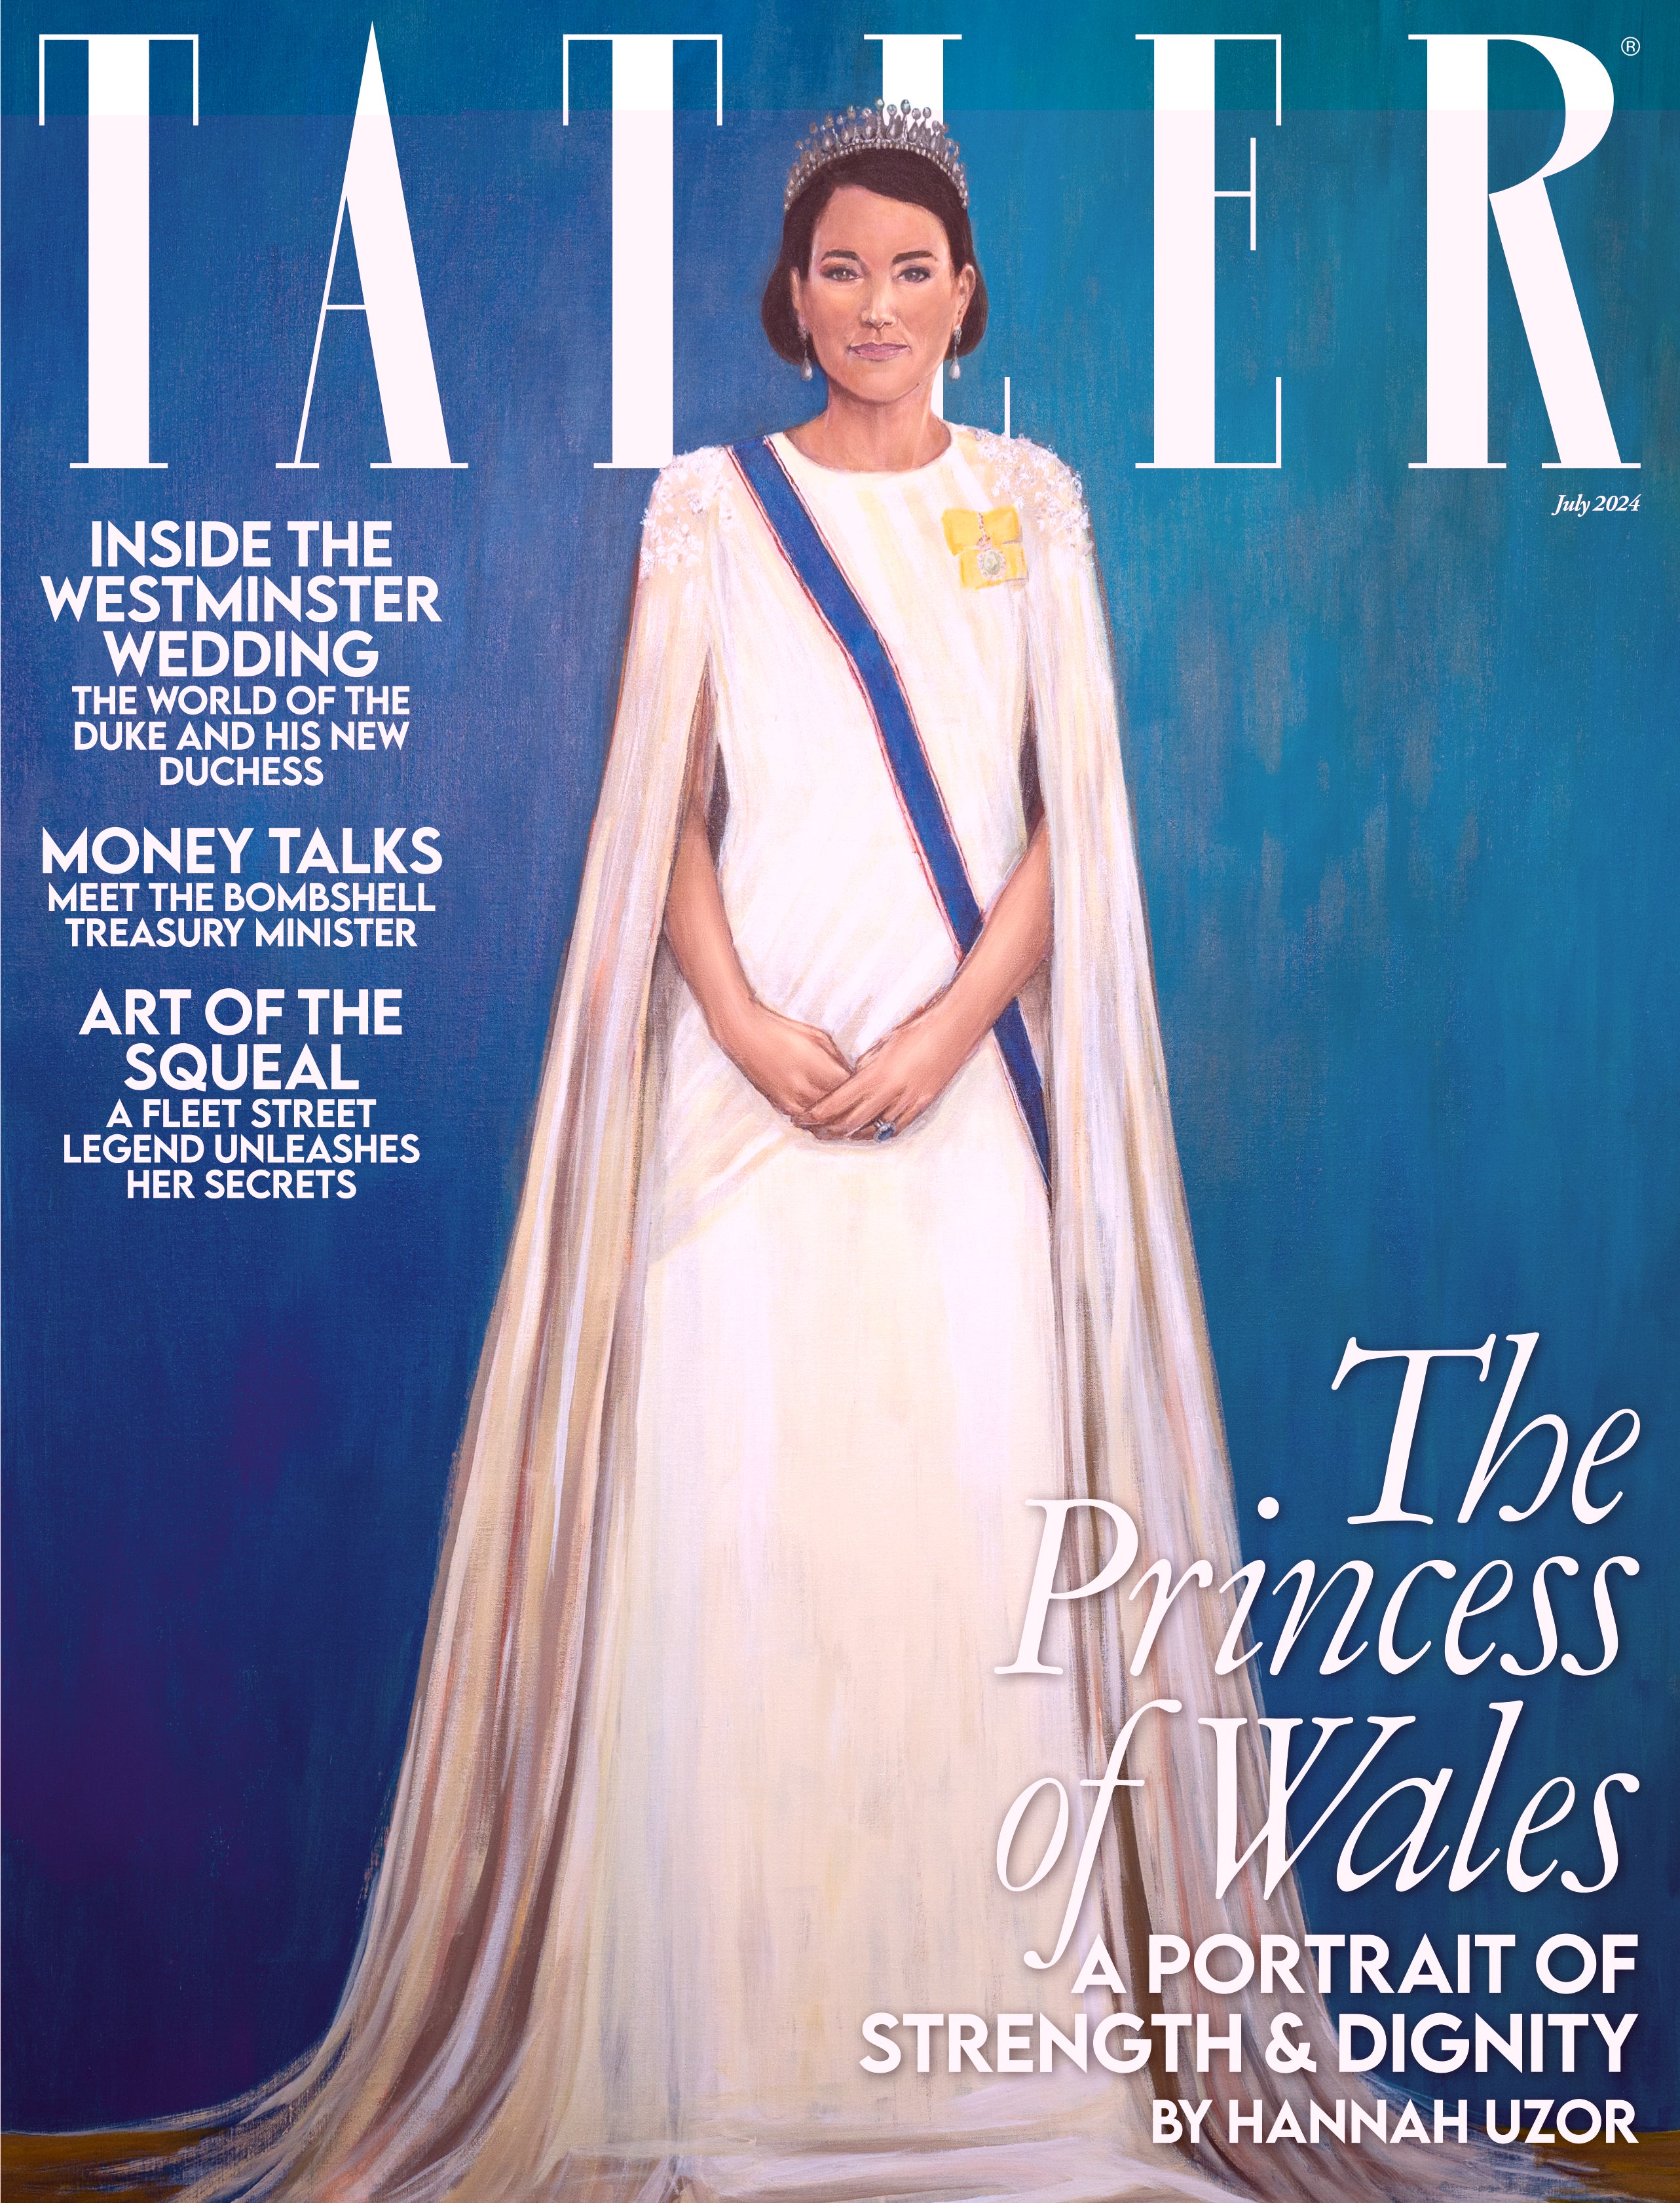 Kate Middleton's new portrait appears on the cover of Tatler magazine